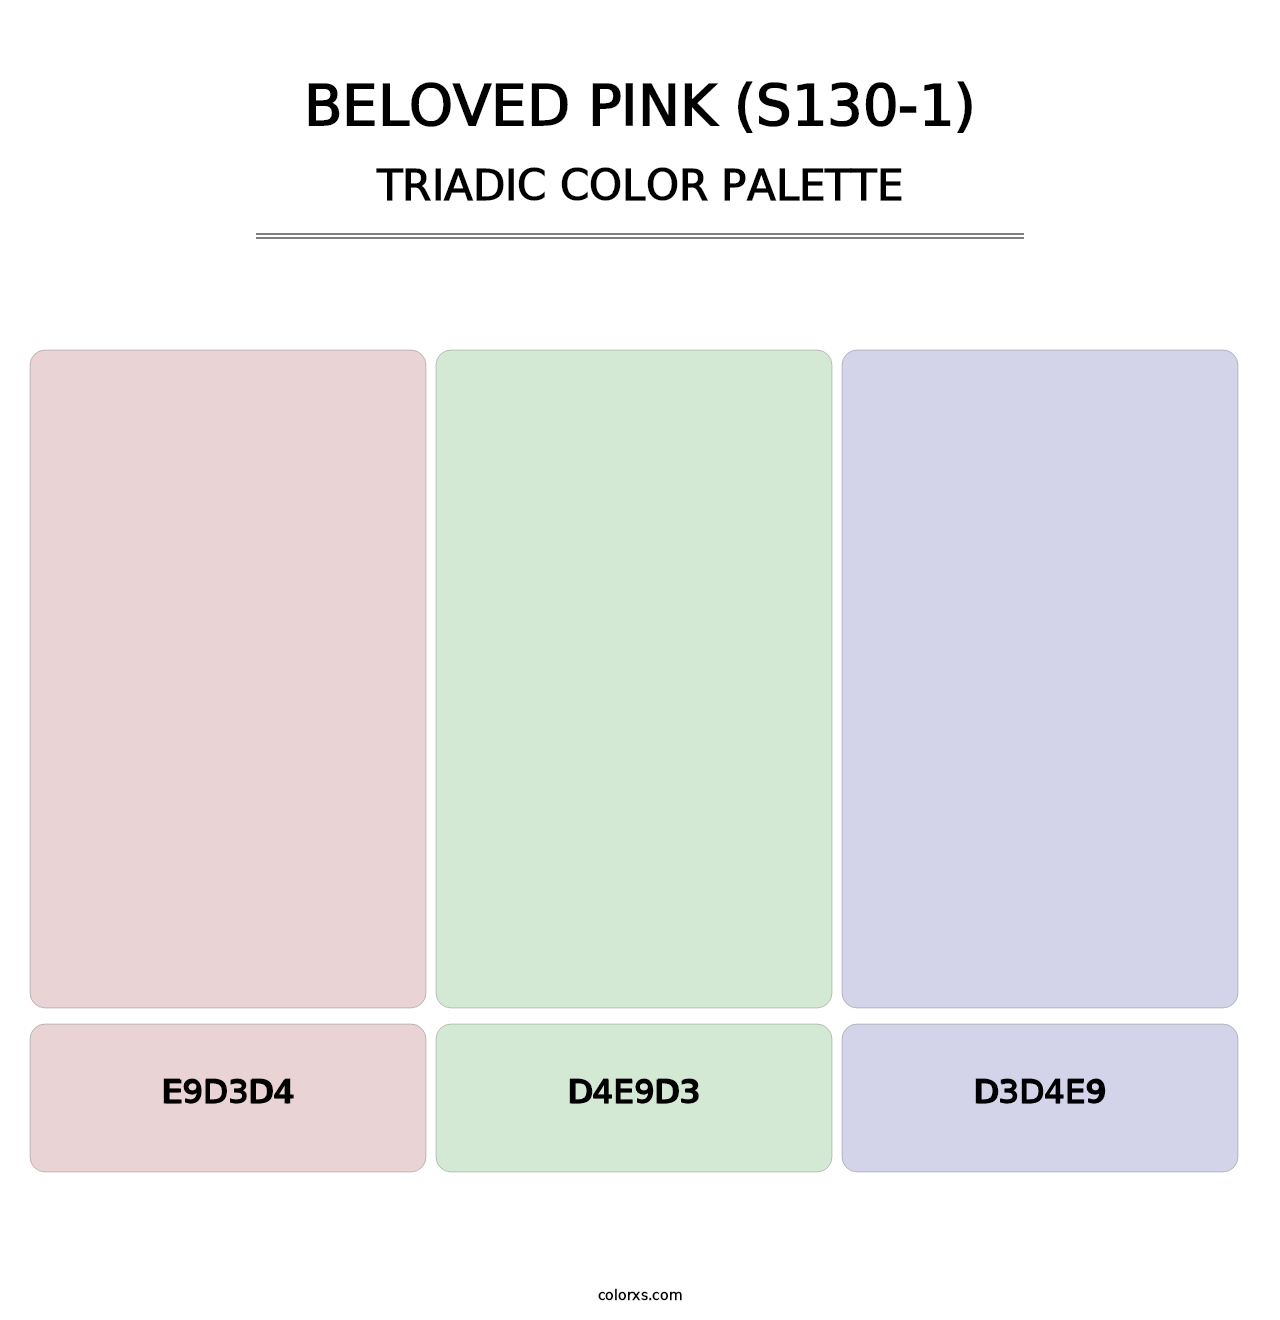 Beloved Pink (S130-1) - Triadic Color Palette